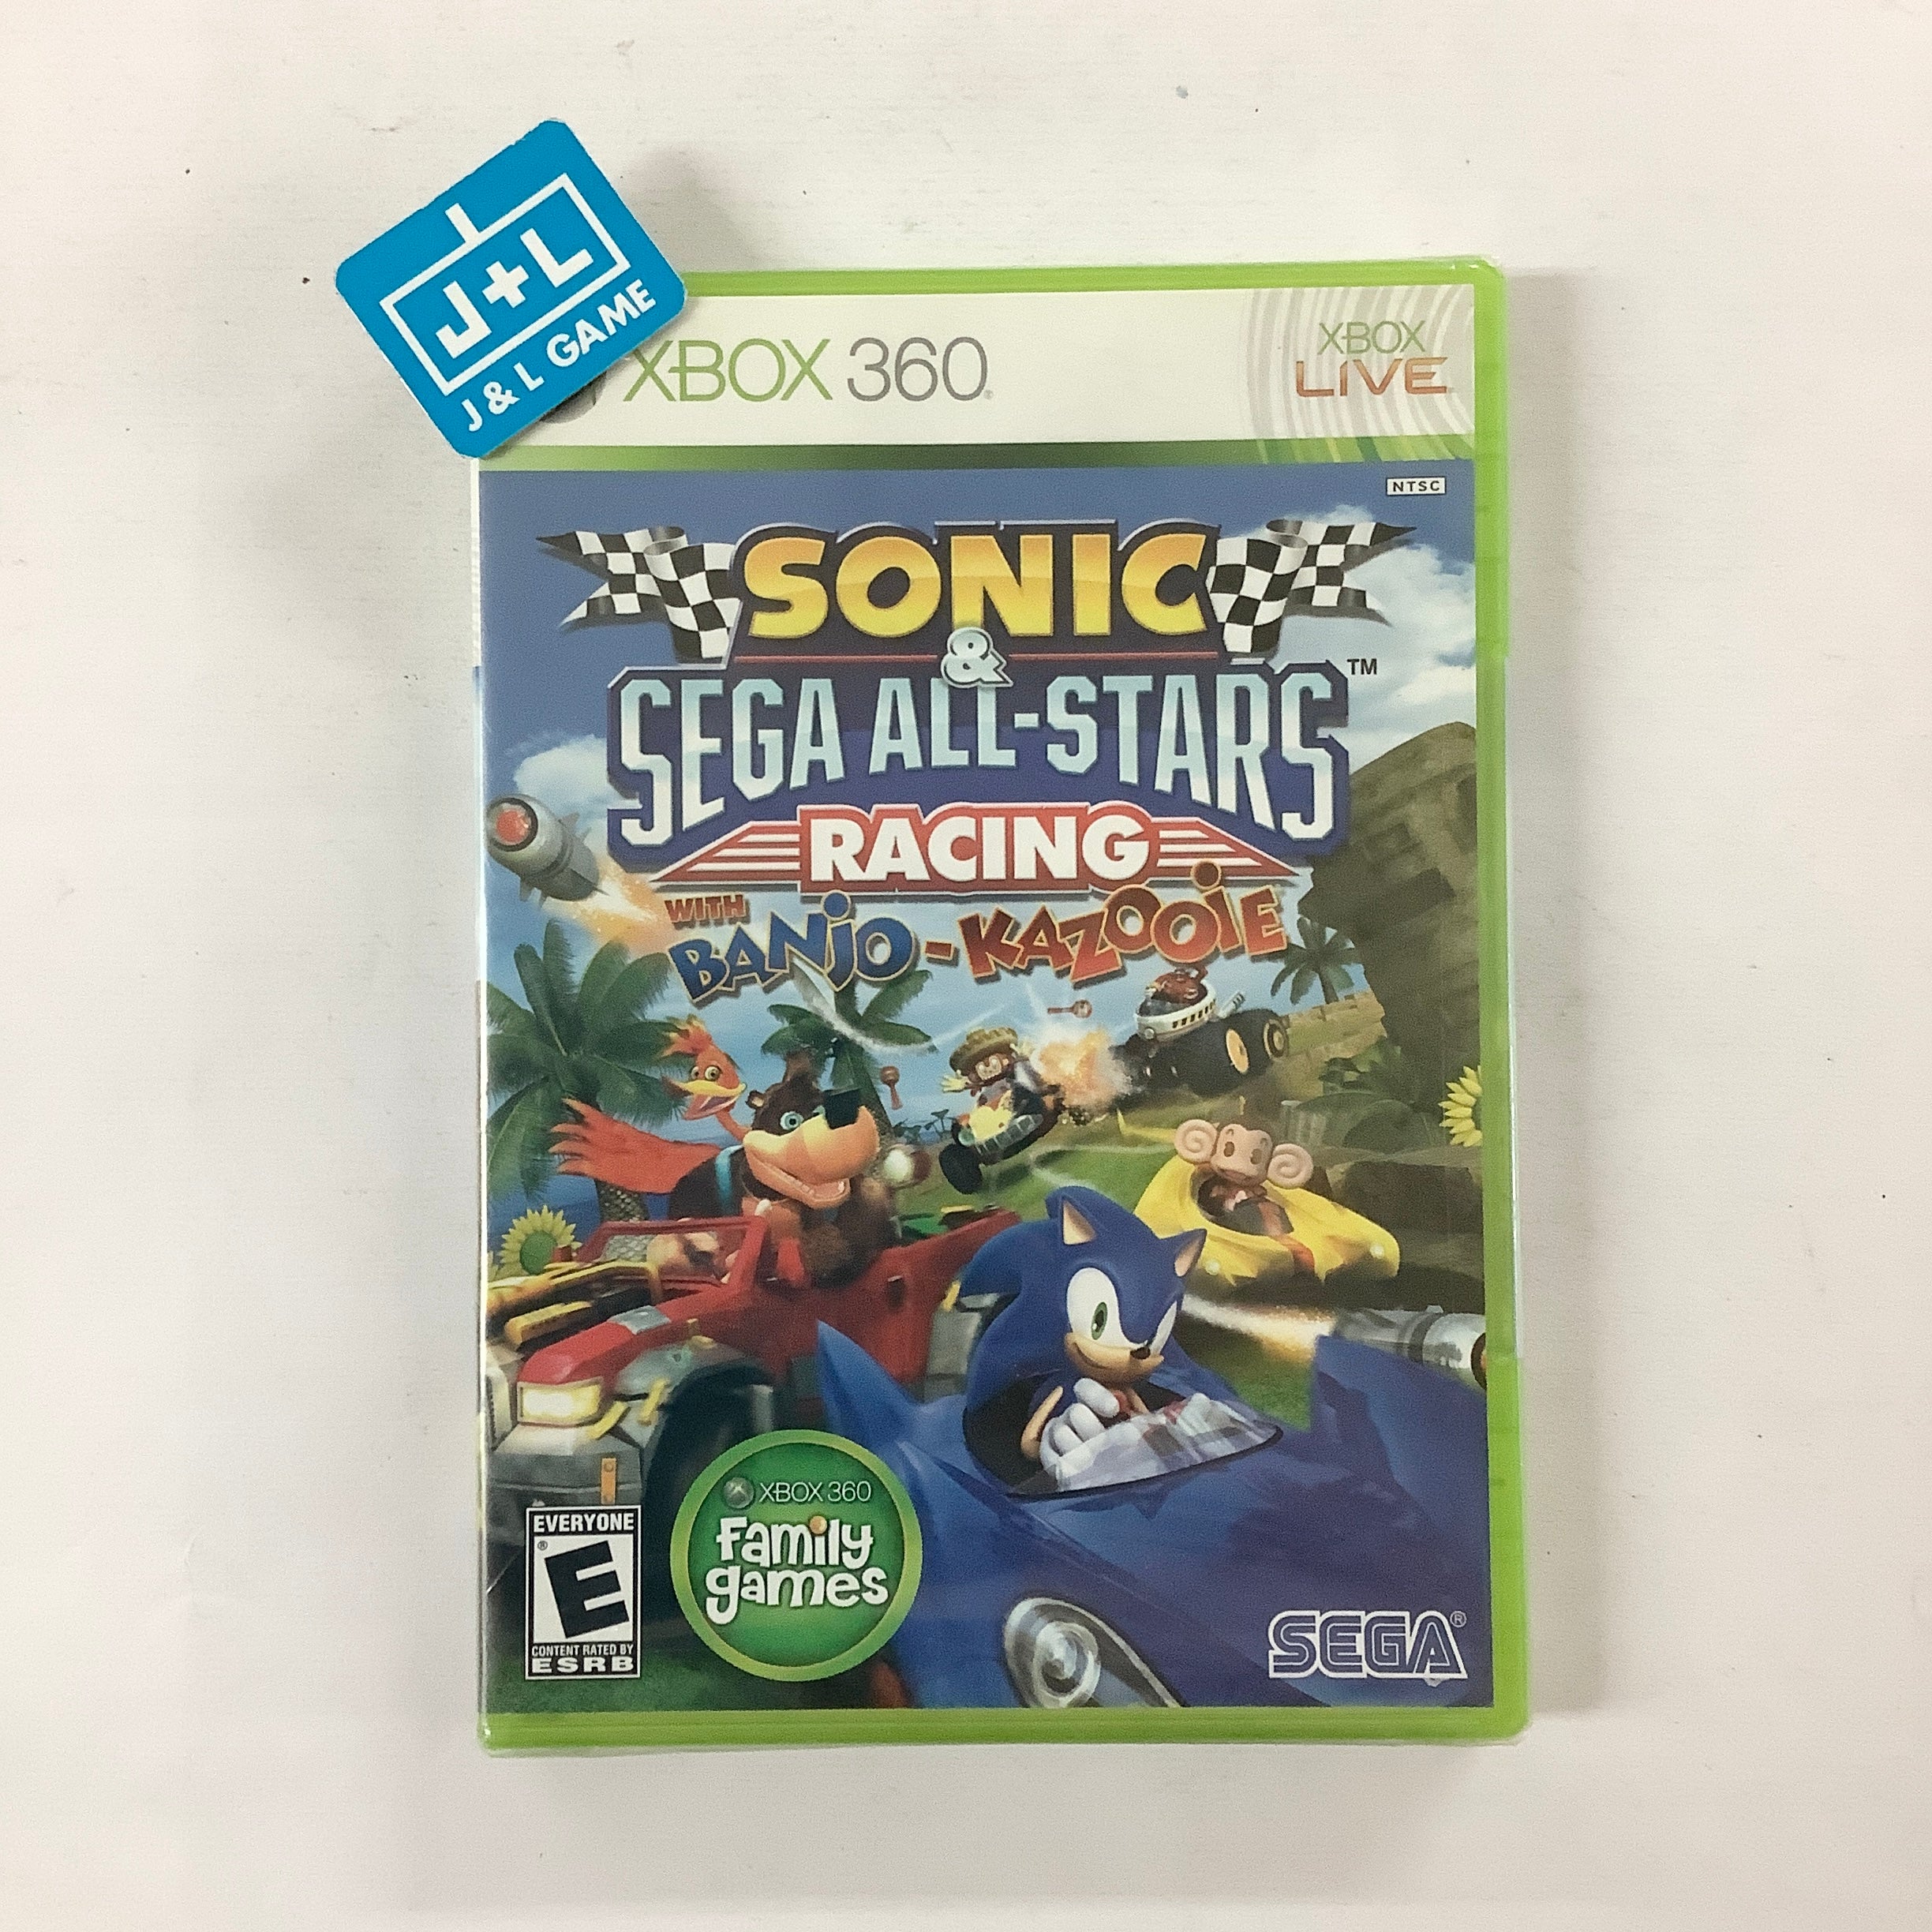 Sonic & Sega All-Stars Racing with Banjo-Kazooie - Xbox 360